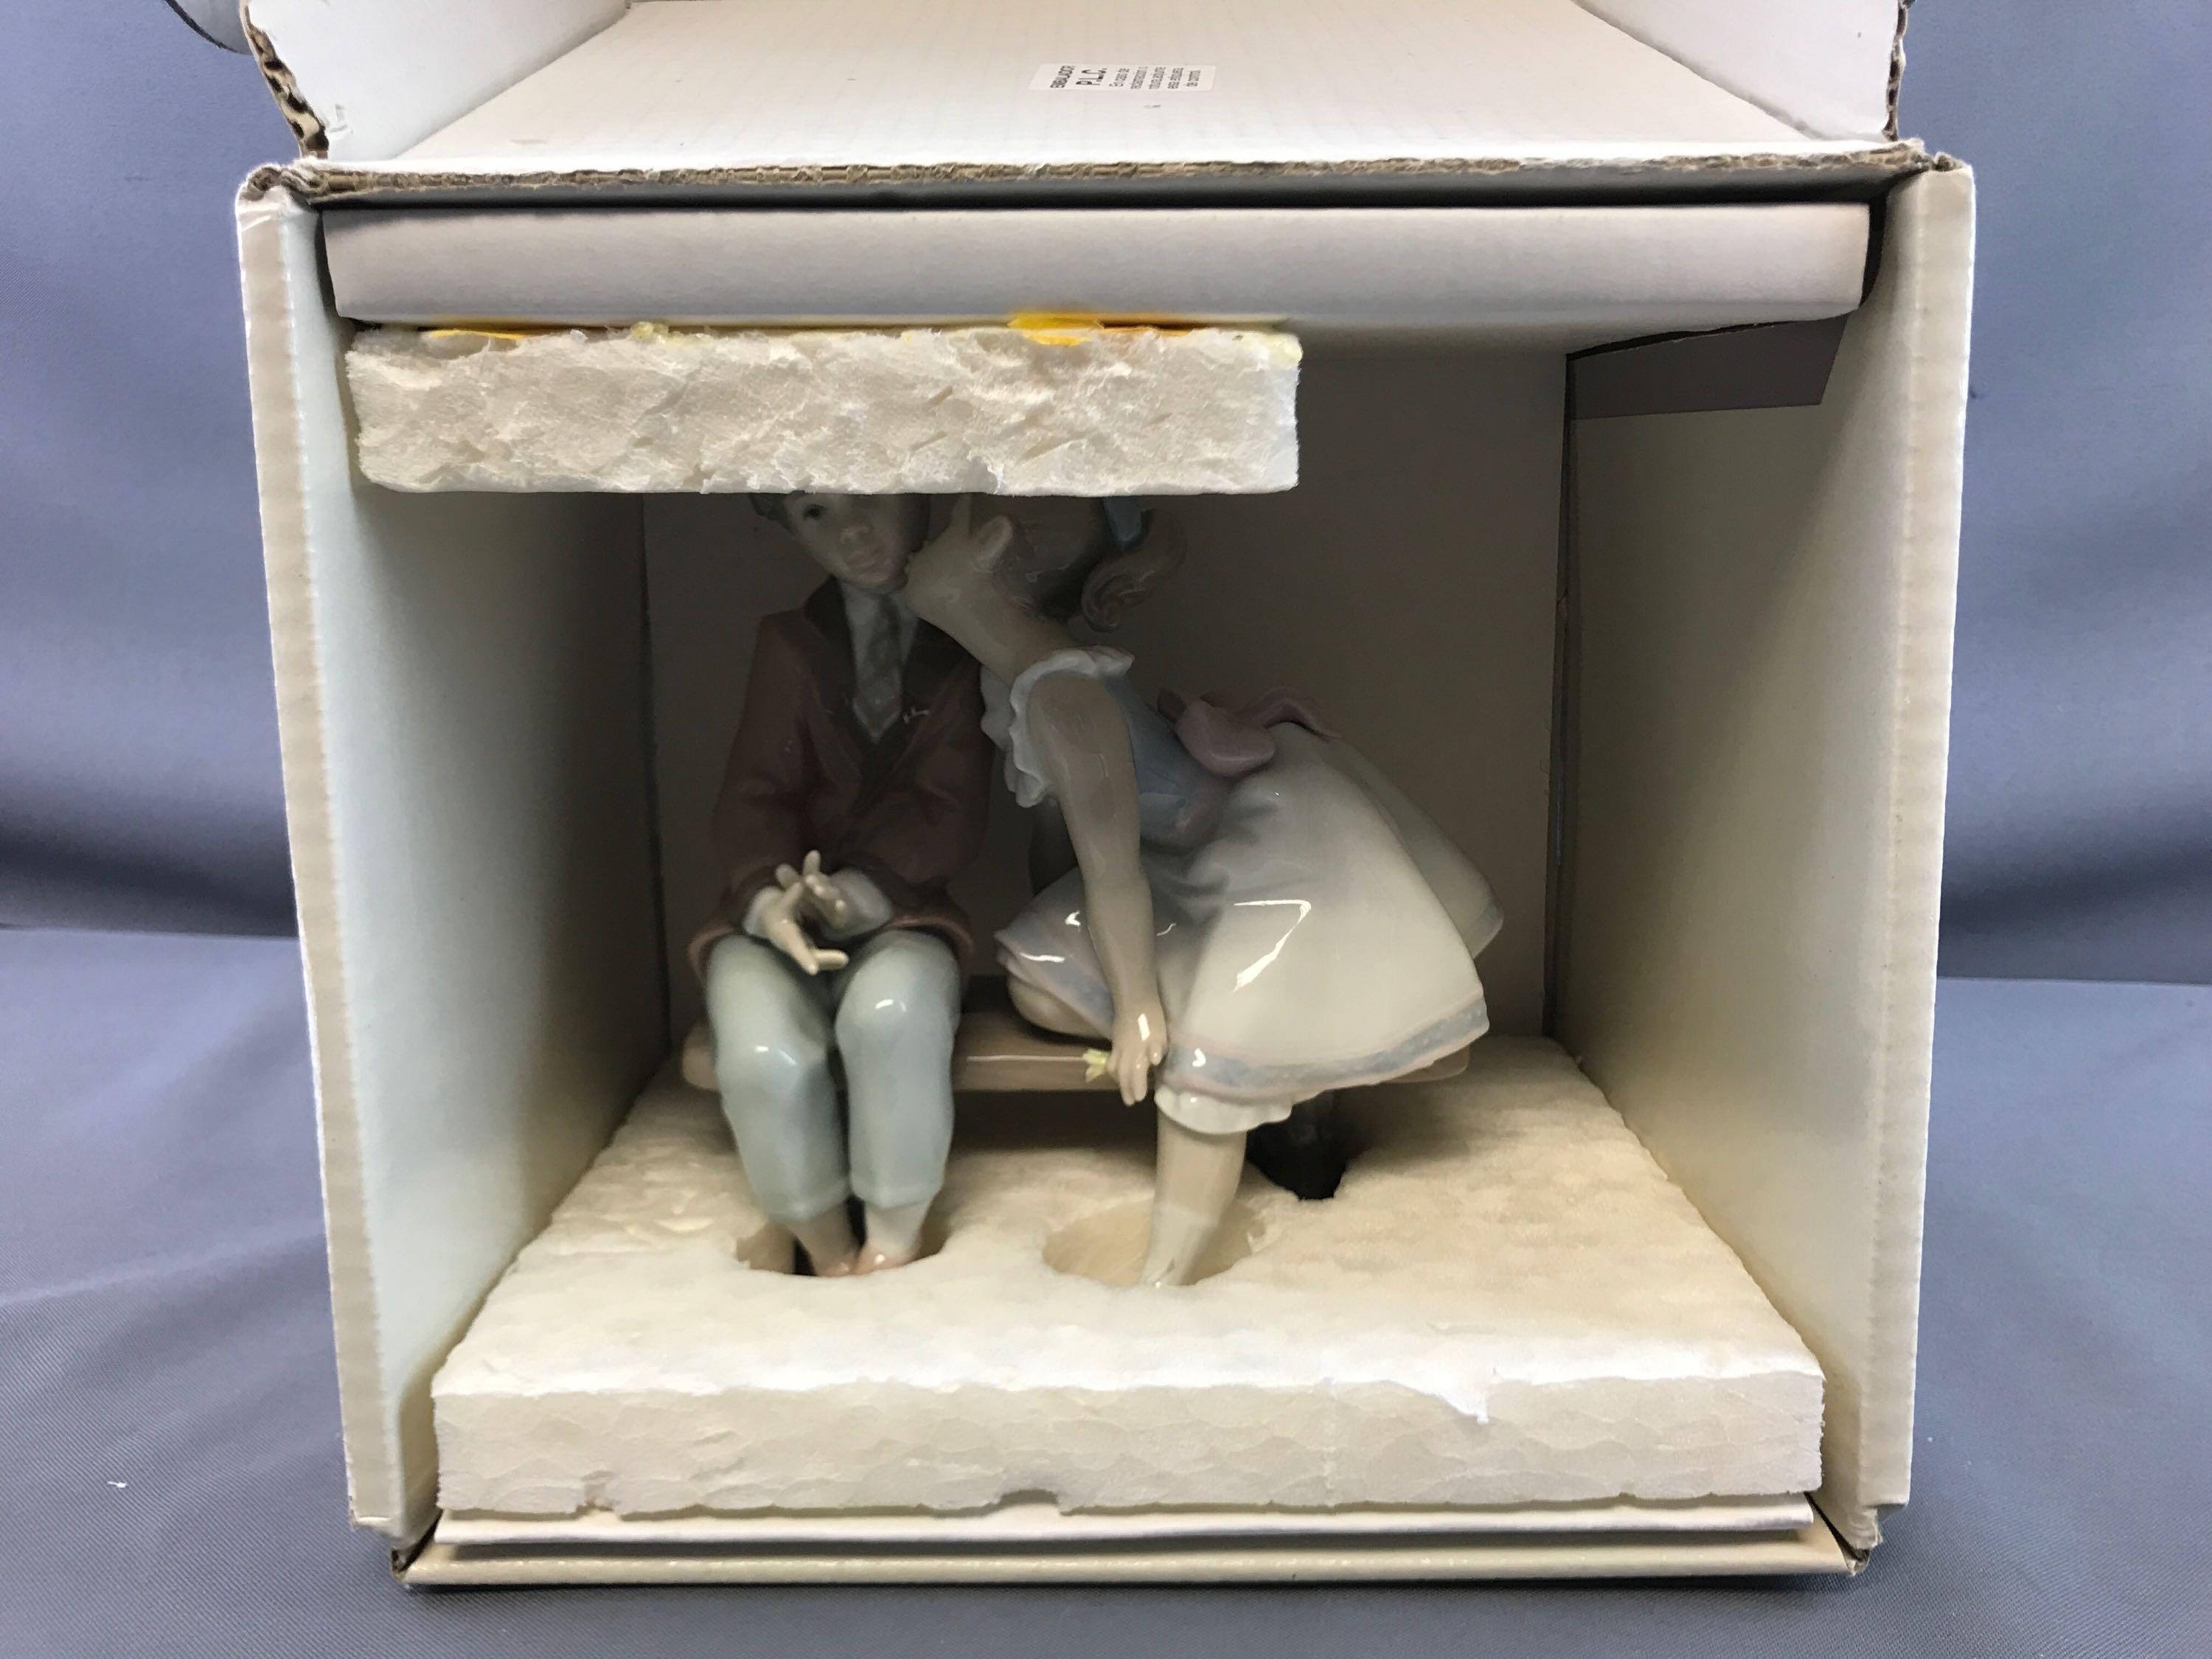 Lladro Ten and Growing figurine in original box